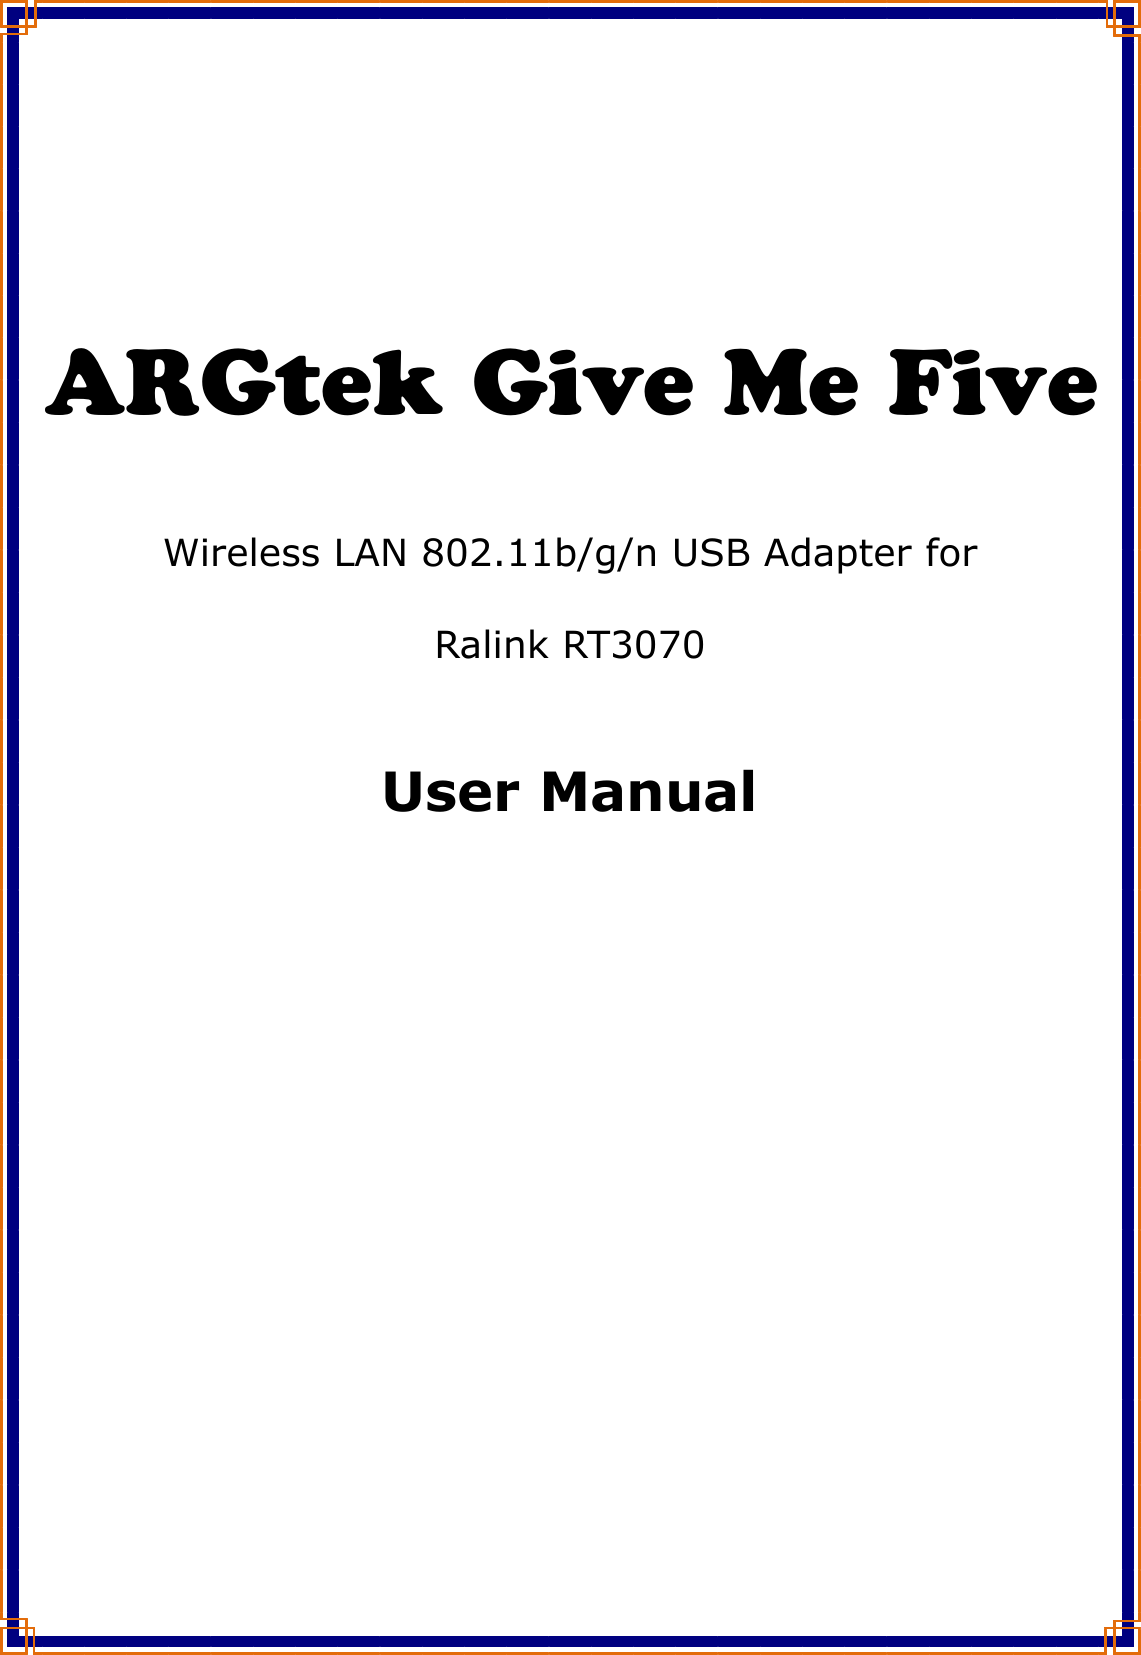      ARGtek Give Me Five   Wireless LAN 802.11b/g/n USB Adapter for  Ralink RT3070   User Manual    